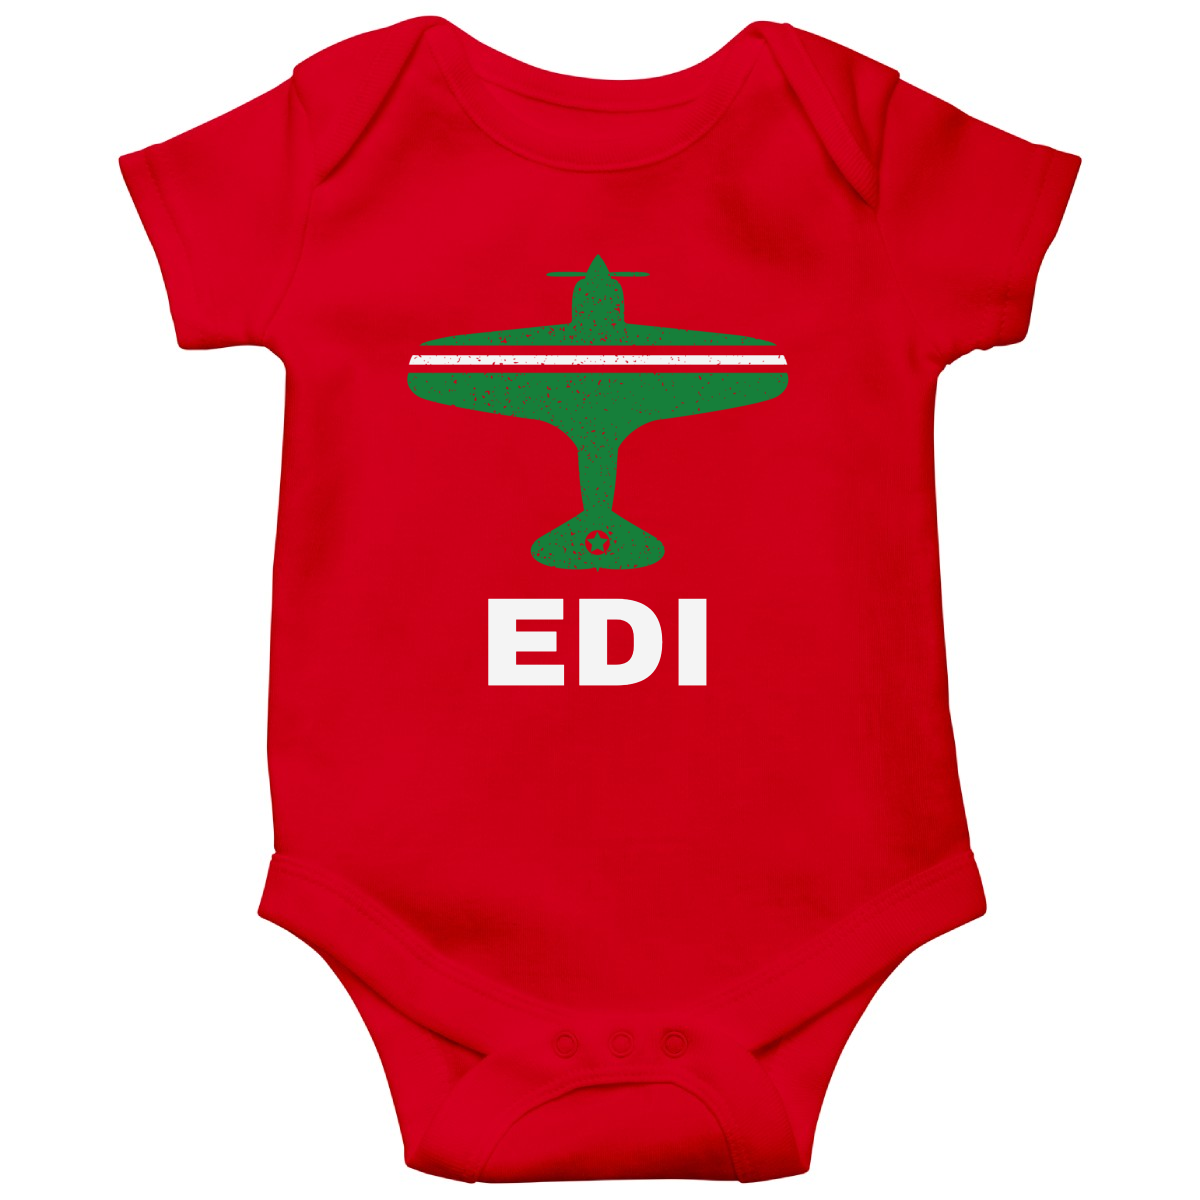 Fly Edinburgh EDI Airport Baby Bodysuits | Red